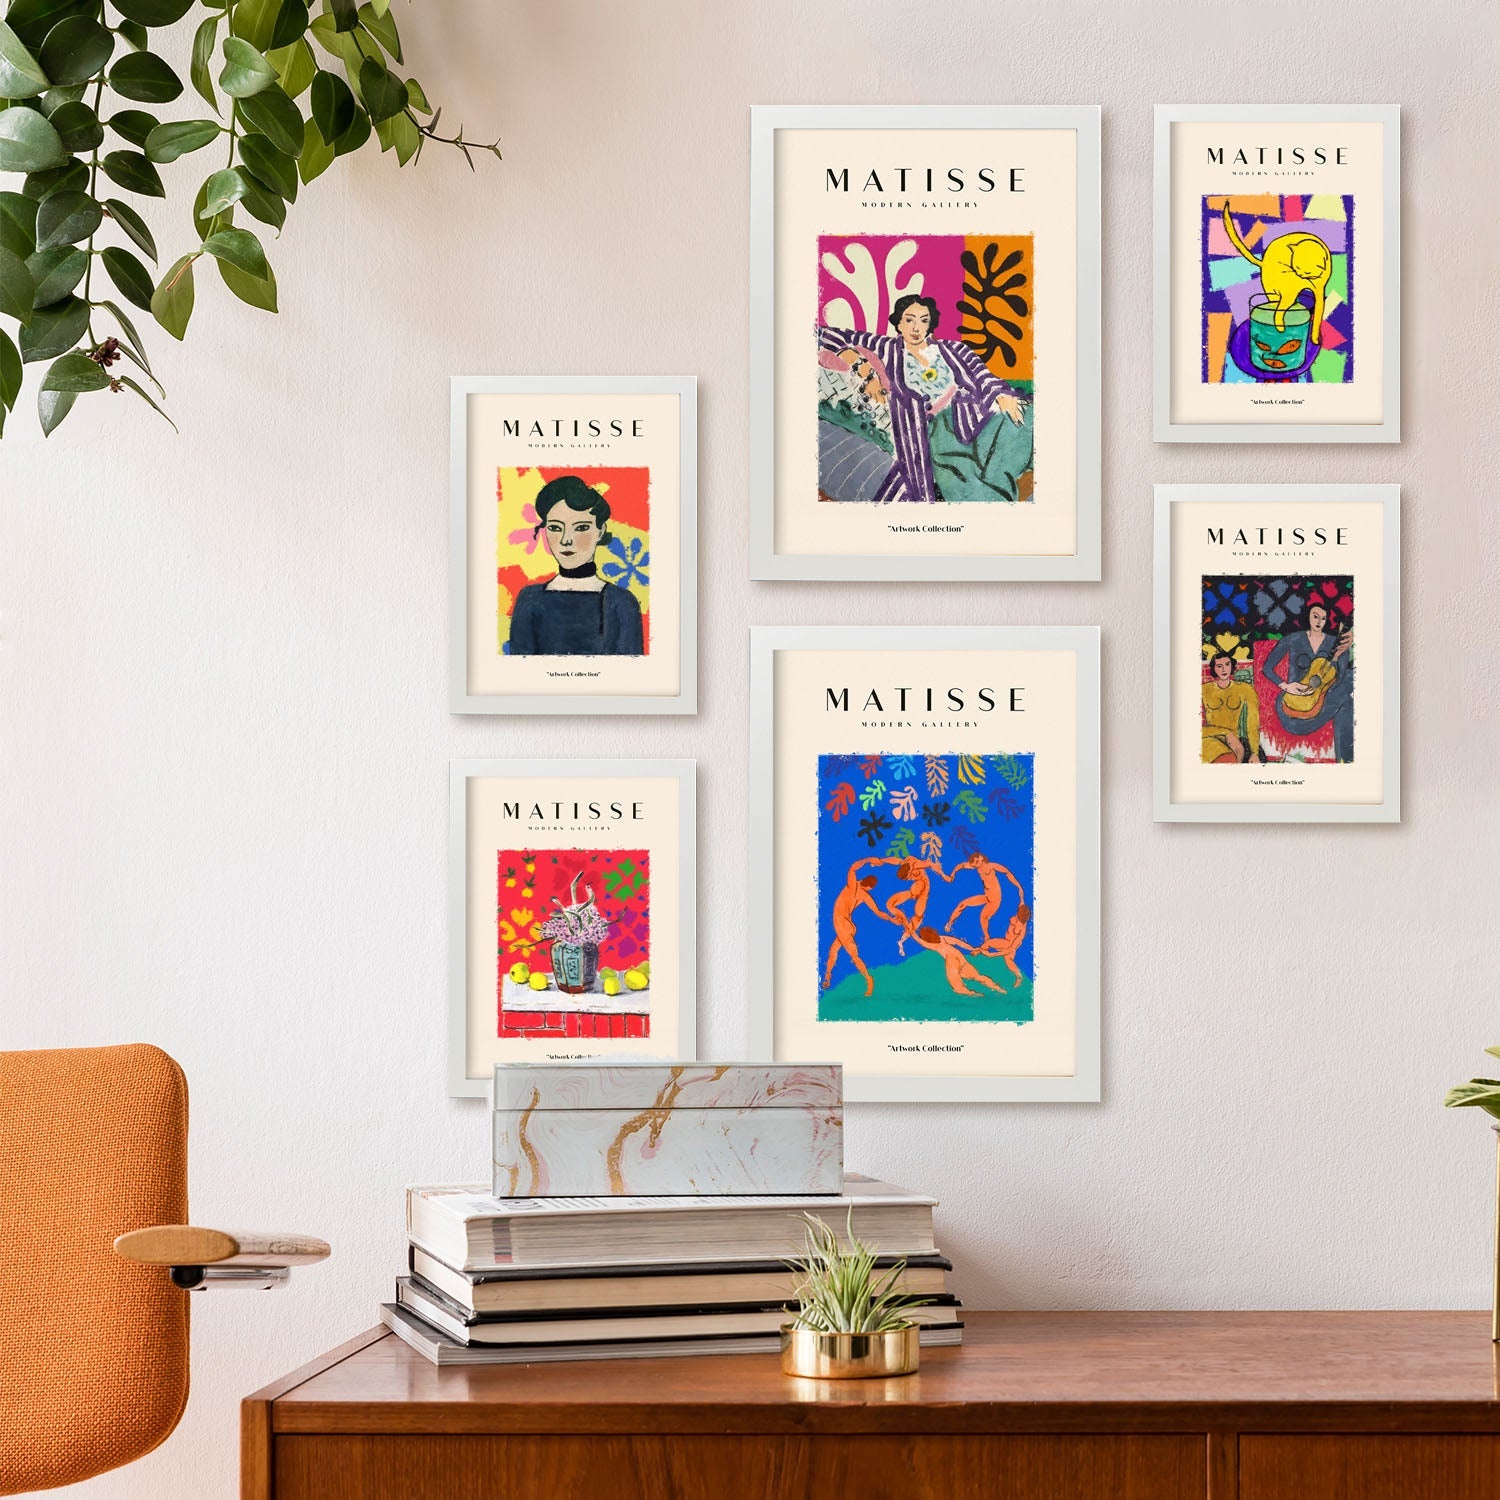 Henri Matisse Posters. Celebration. Abstract Fauvism Art Gallery-Artwork-Nacnic-Nacnic Estudio SL